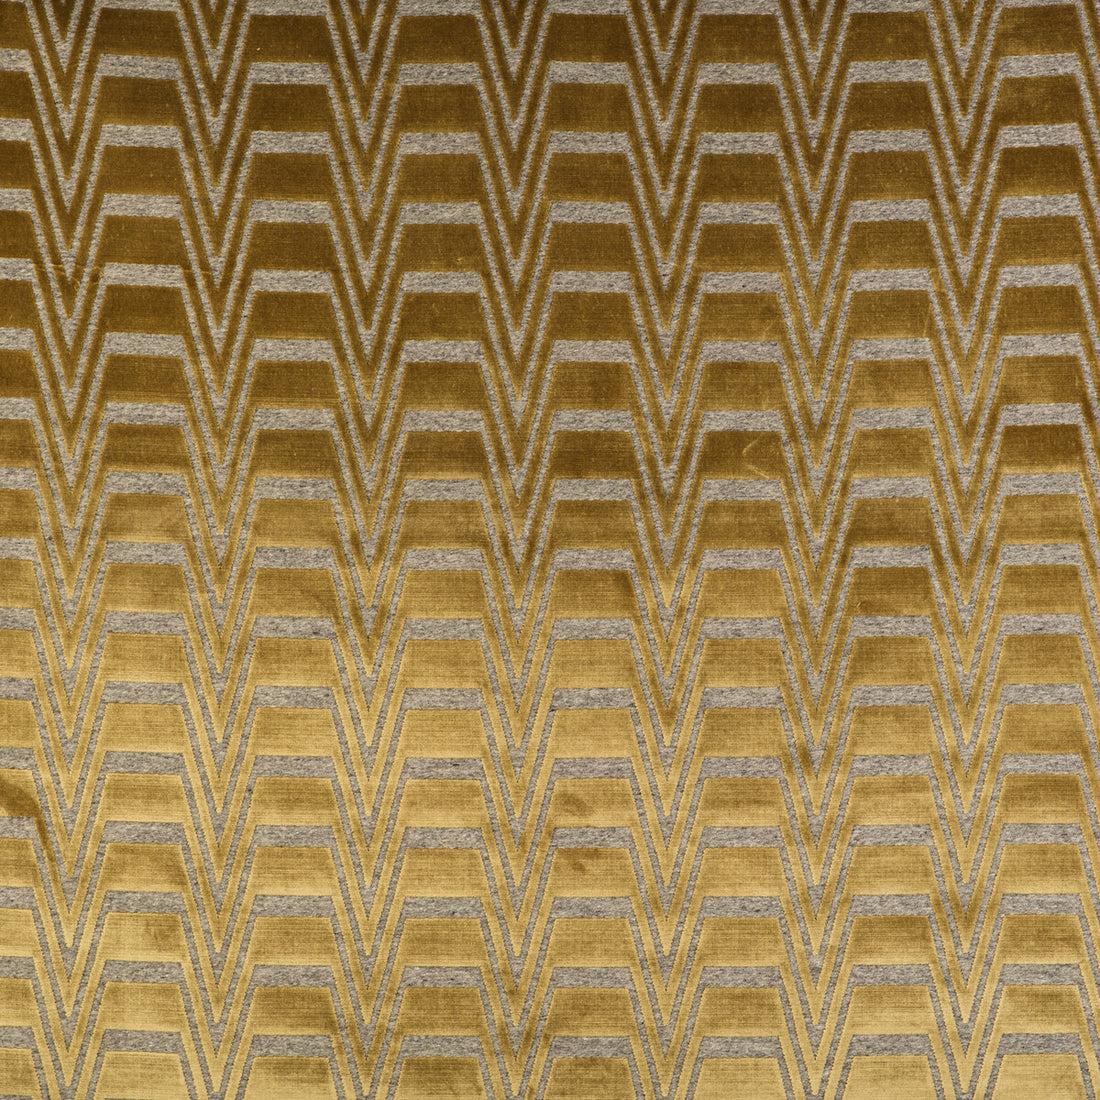 Meseta fabric in amarillo color - pattern GDT5502.001.0 - by Gaston y Daniela in the Gaston Libreria collection